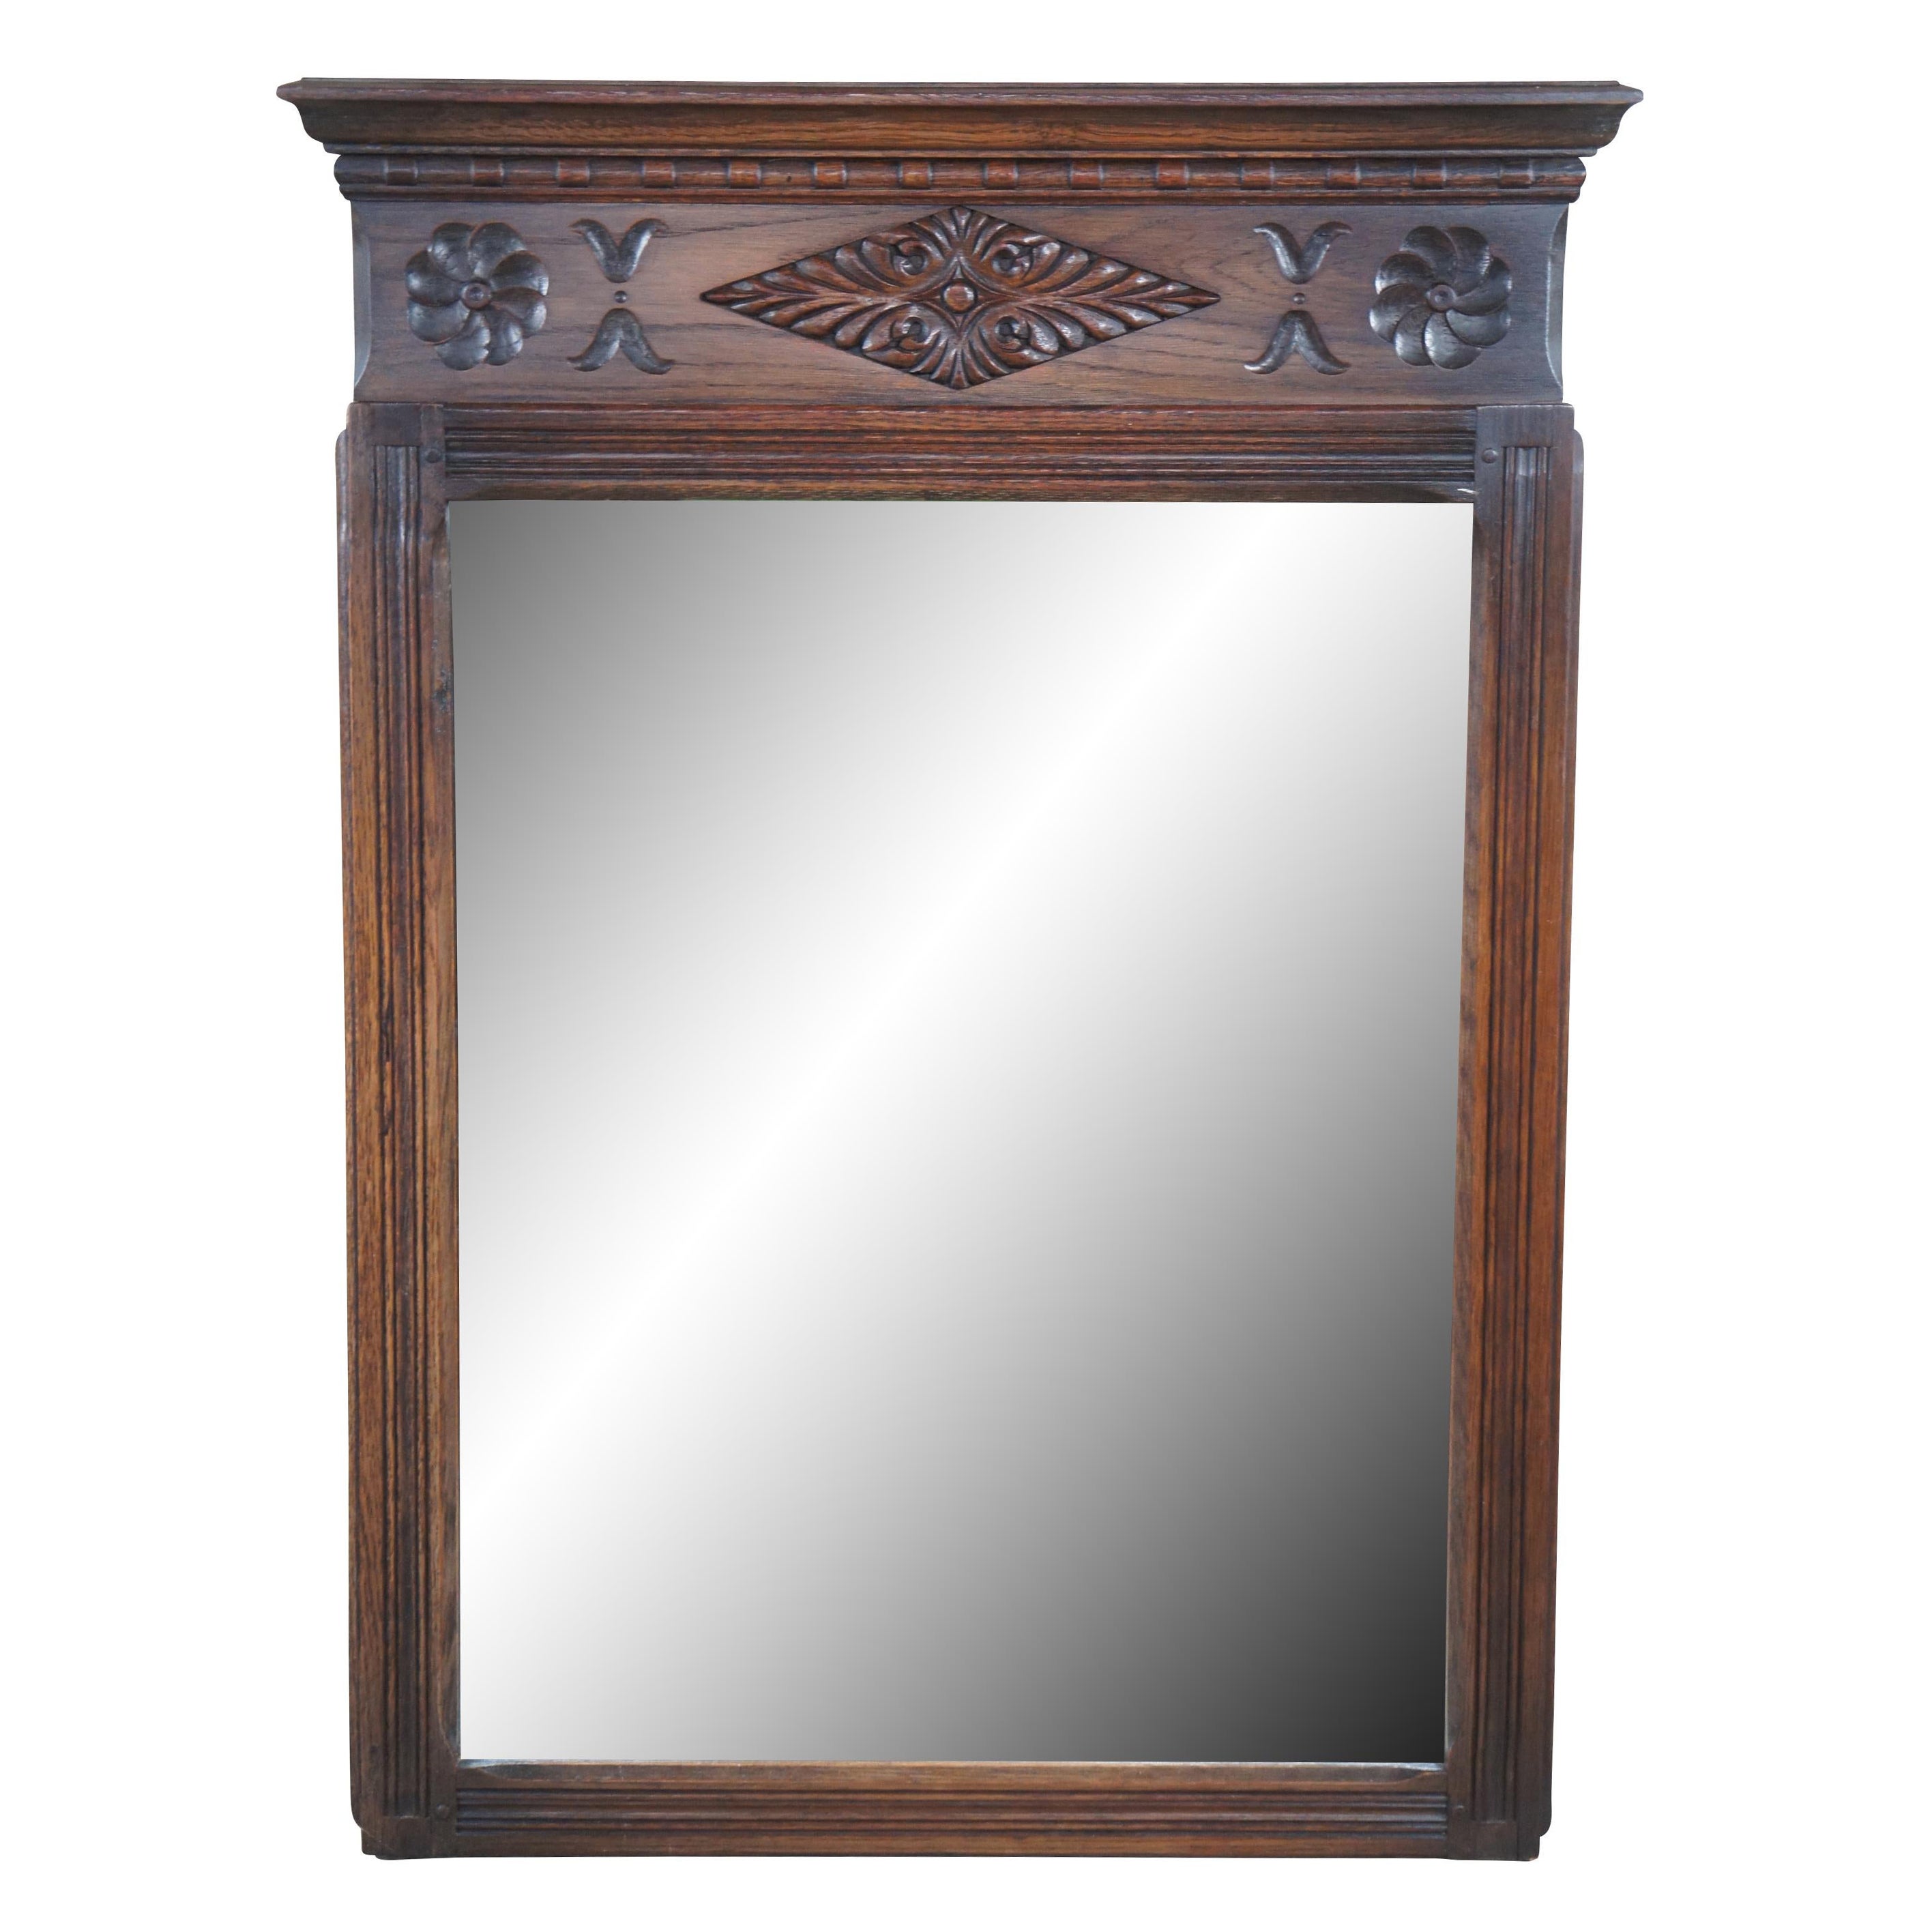 Antique Saginaw Furniture Jacobean Spanish Revival Oak Wall Hanging Mirror 